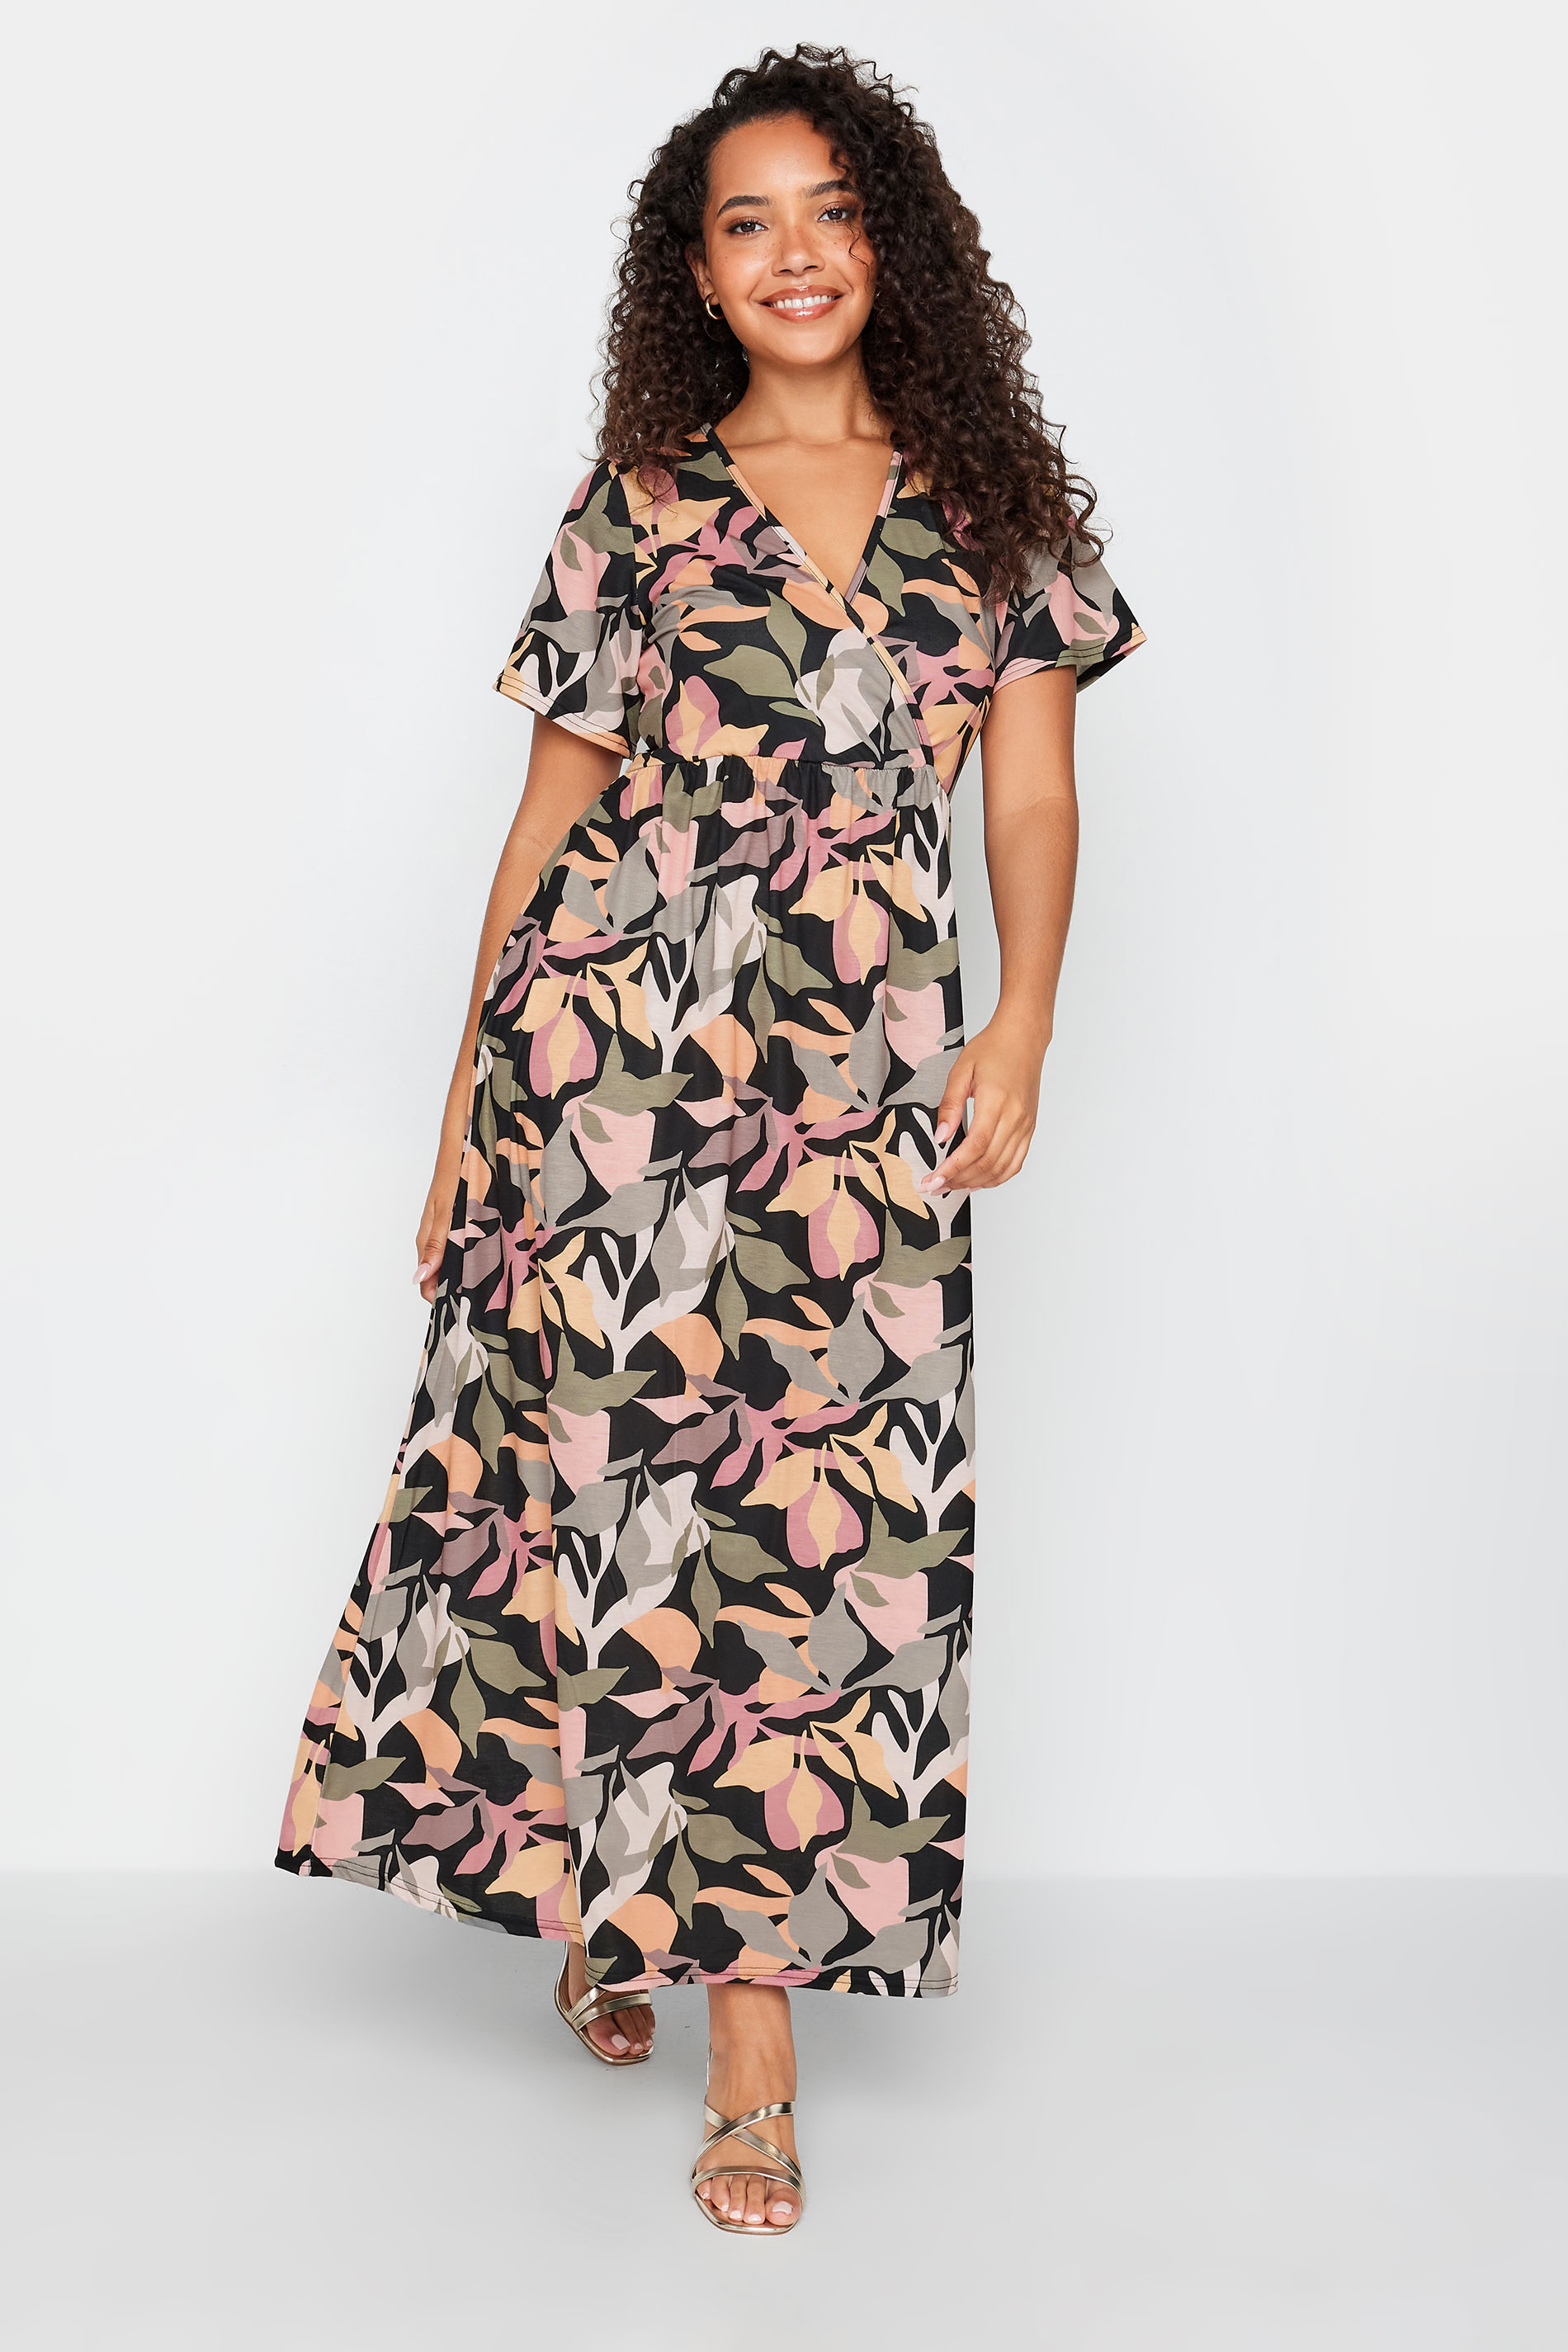 M&Co Black Tropical Print Maxi Dress | M&Co